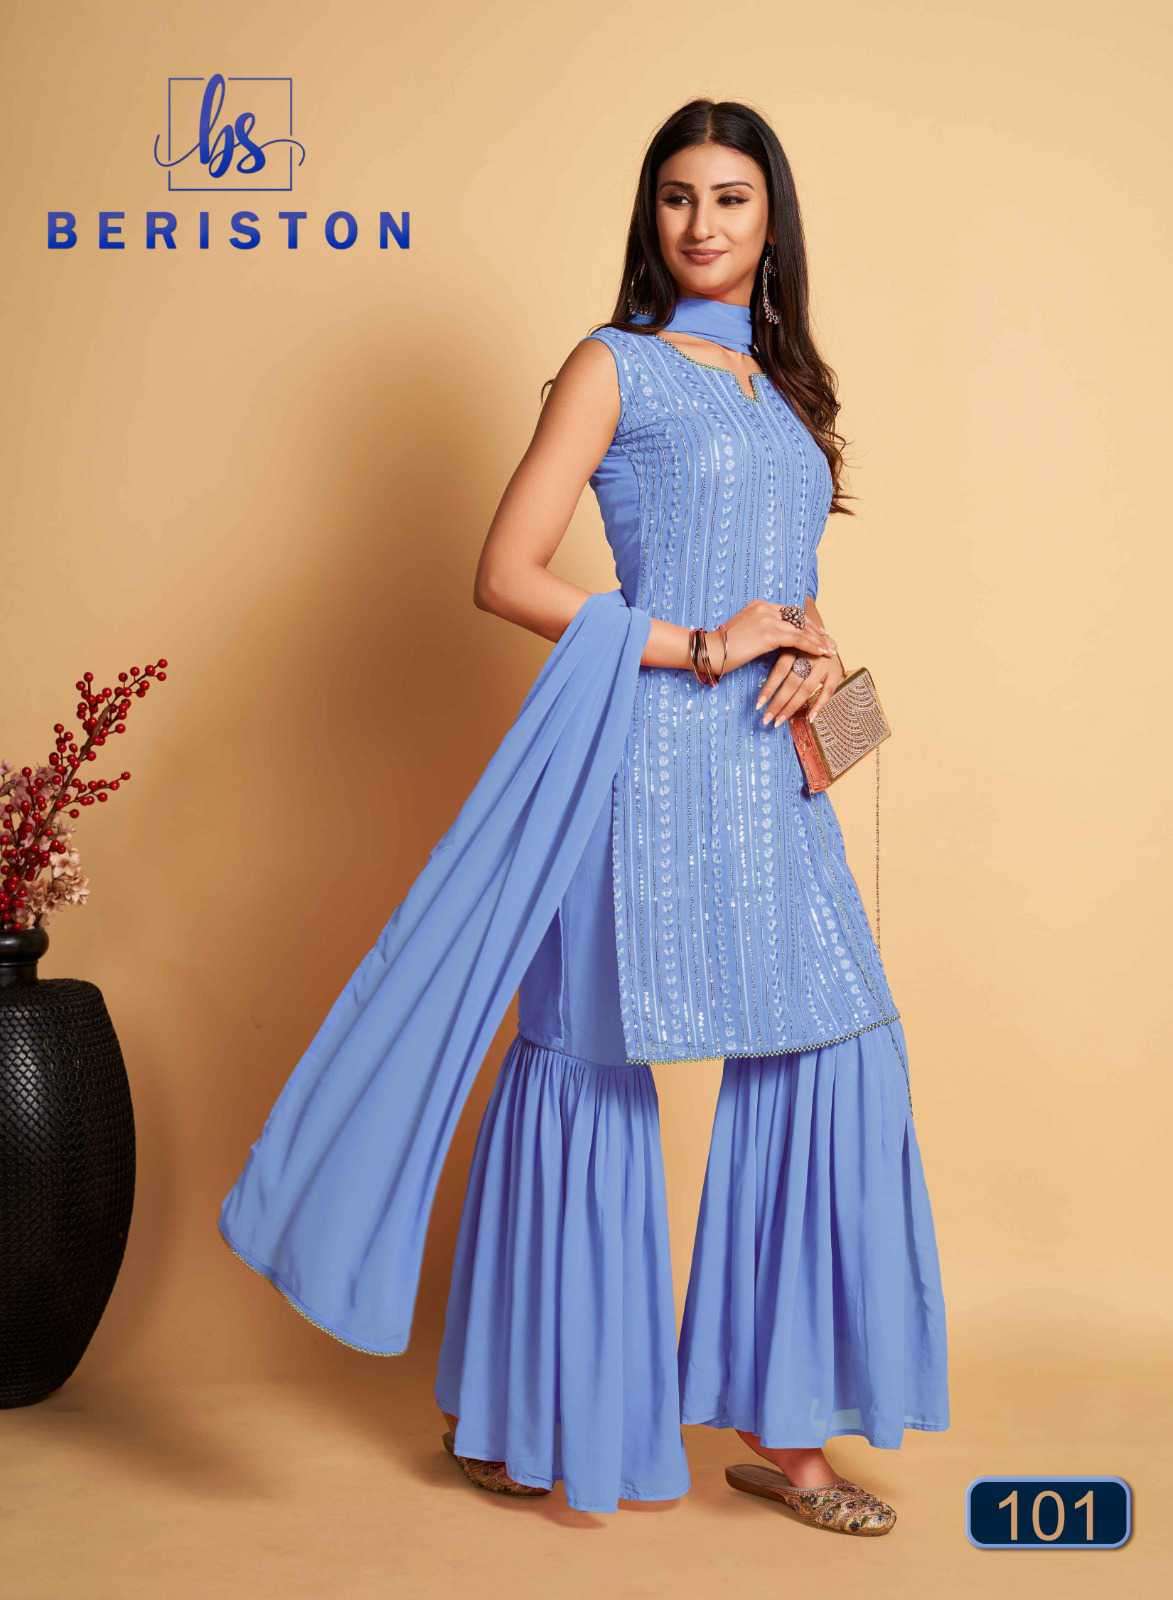 Beriston Bs Vol 1 Fancy Designer Gharara Suit Catalog Dealers